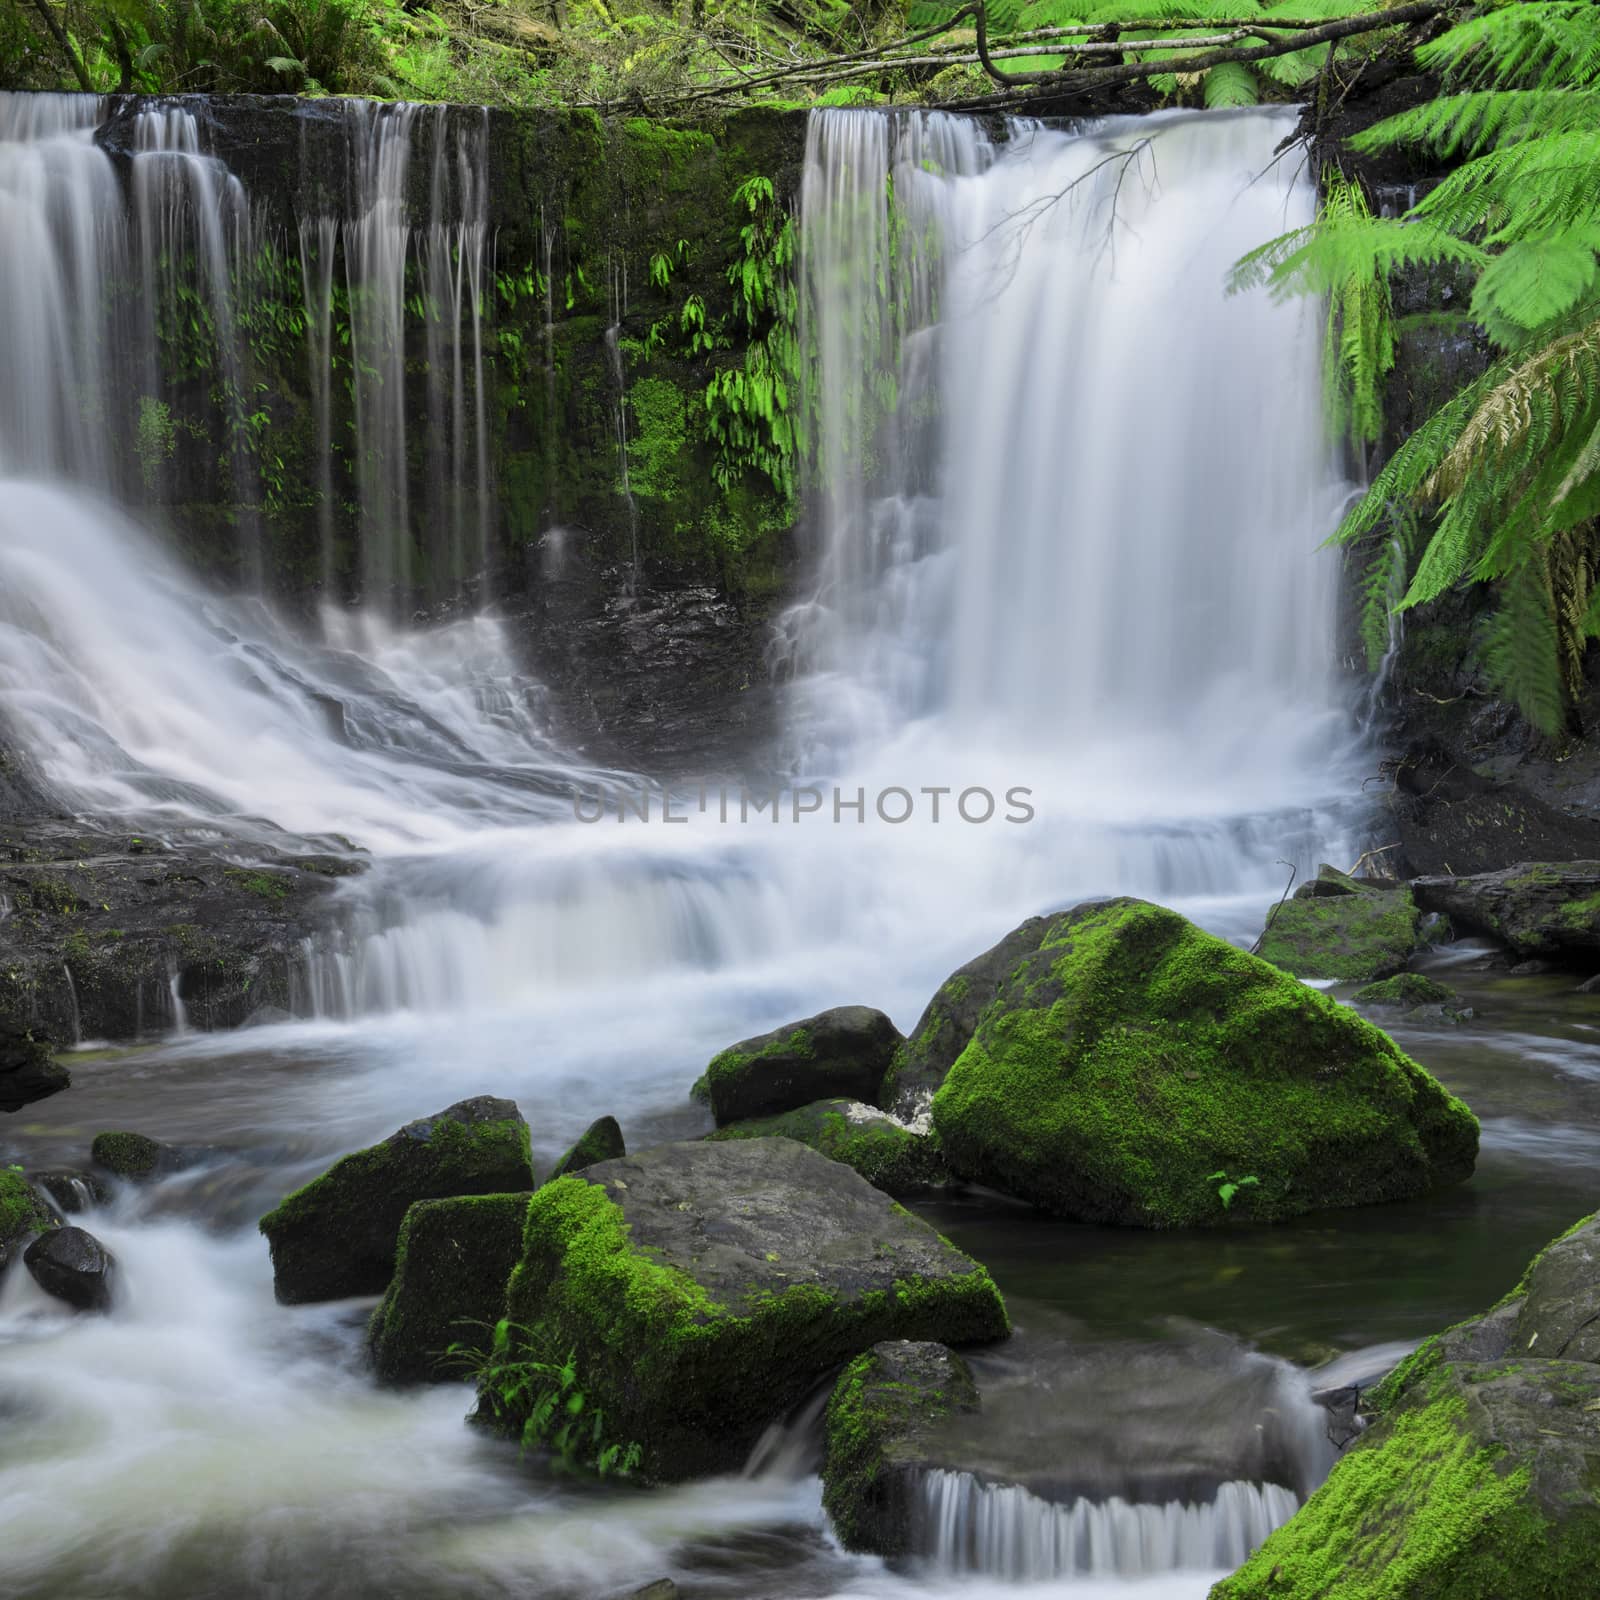 The beautiful Horseshoe Falls after heavy rain fall in Mount Field National Park, Tasmania, Australia.